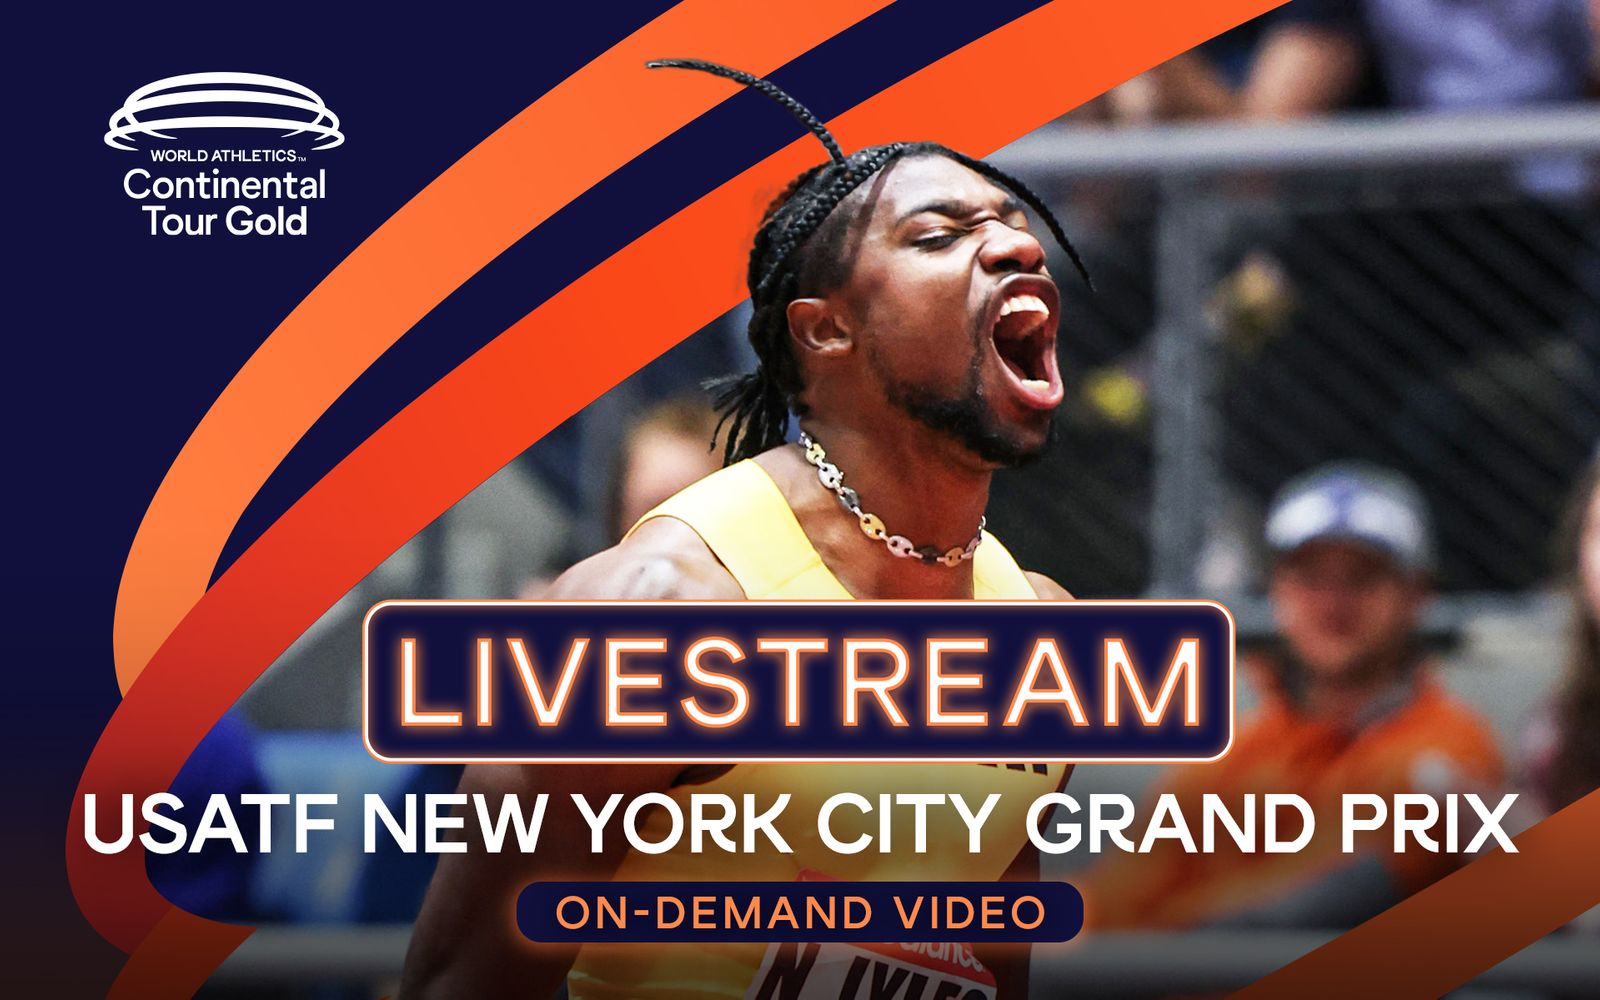 USATF New York City Grand Prix on demand video